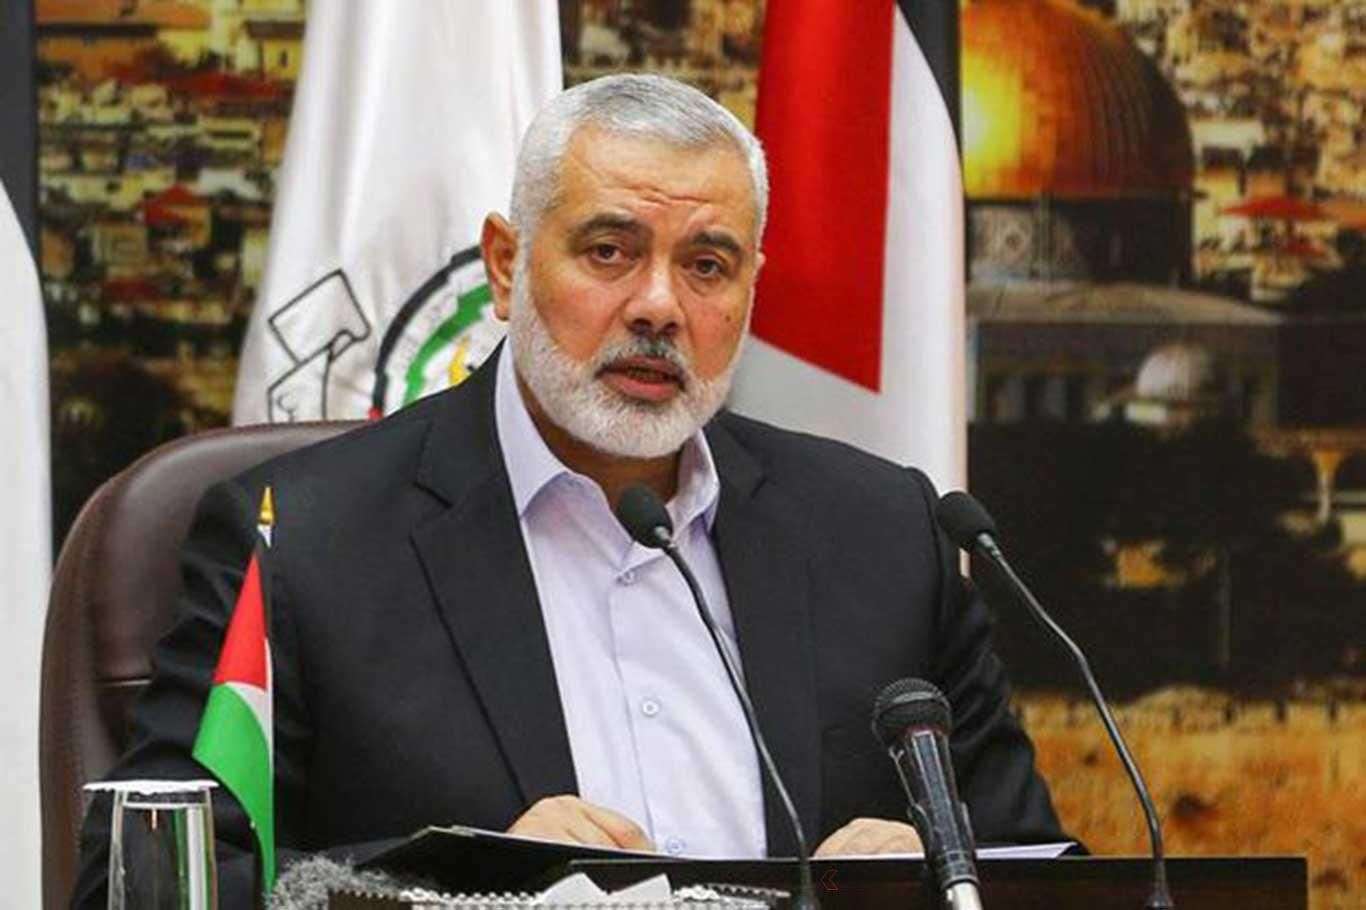 Hamas leader offers condolences to Türkiye and Syria over deadly earthquake